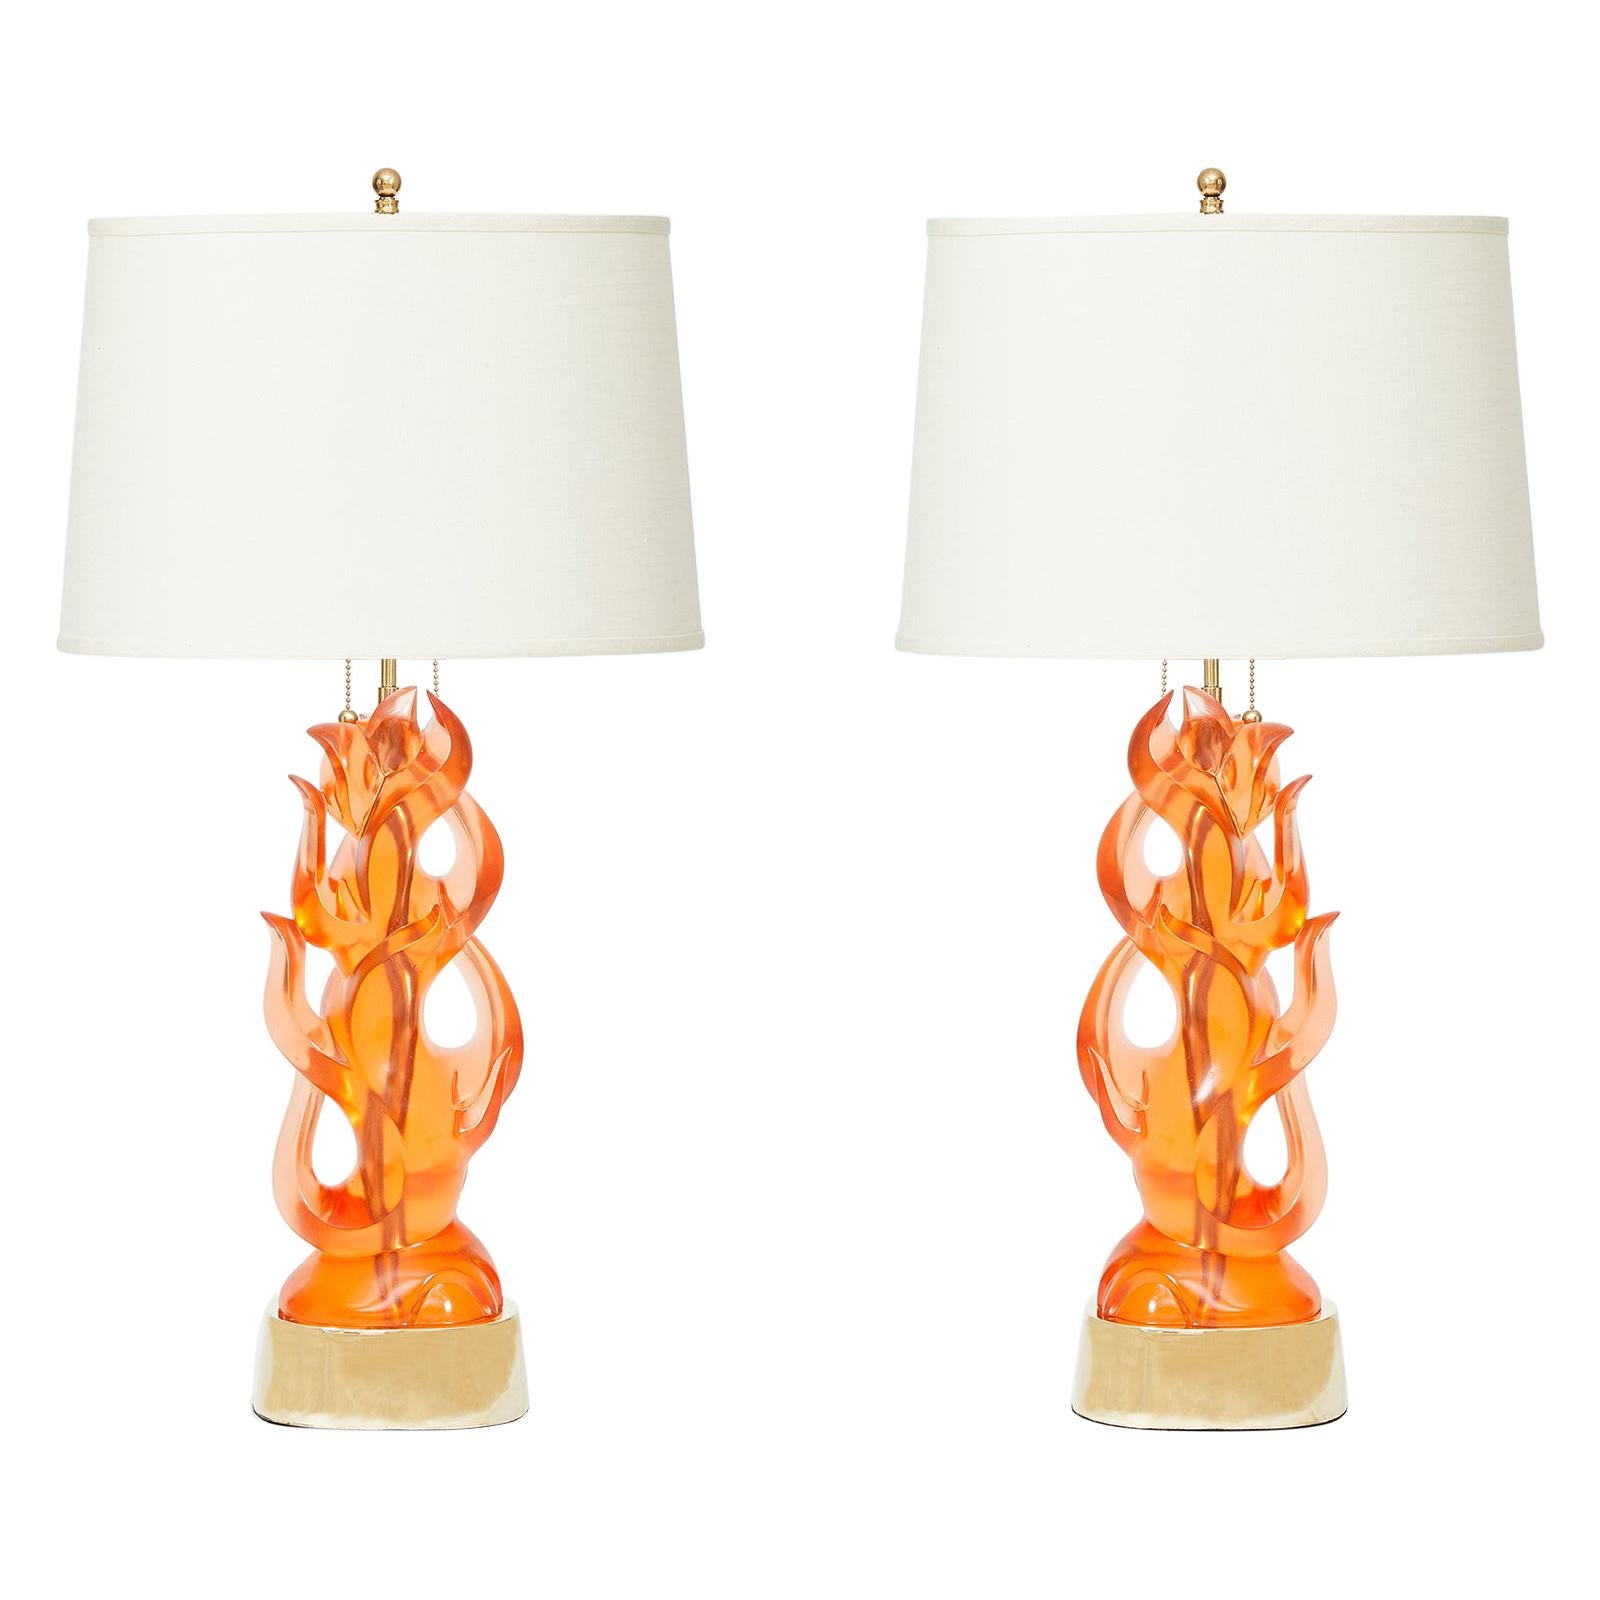 Pair of Candela Lamps in Tangerine by David Duncan Studio